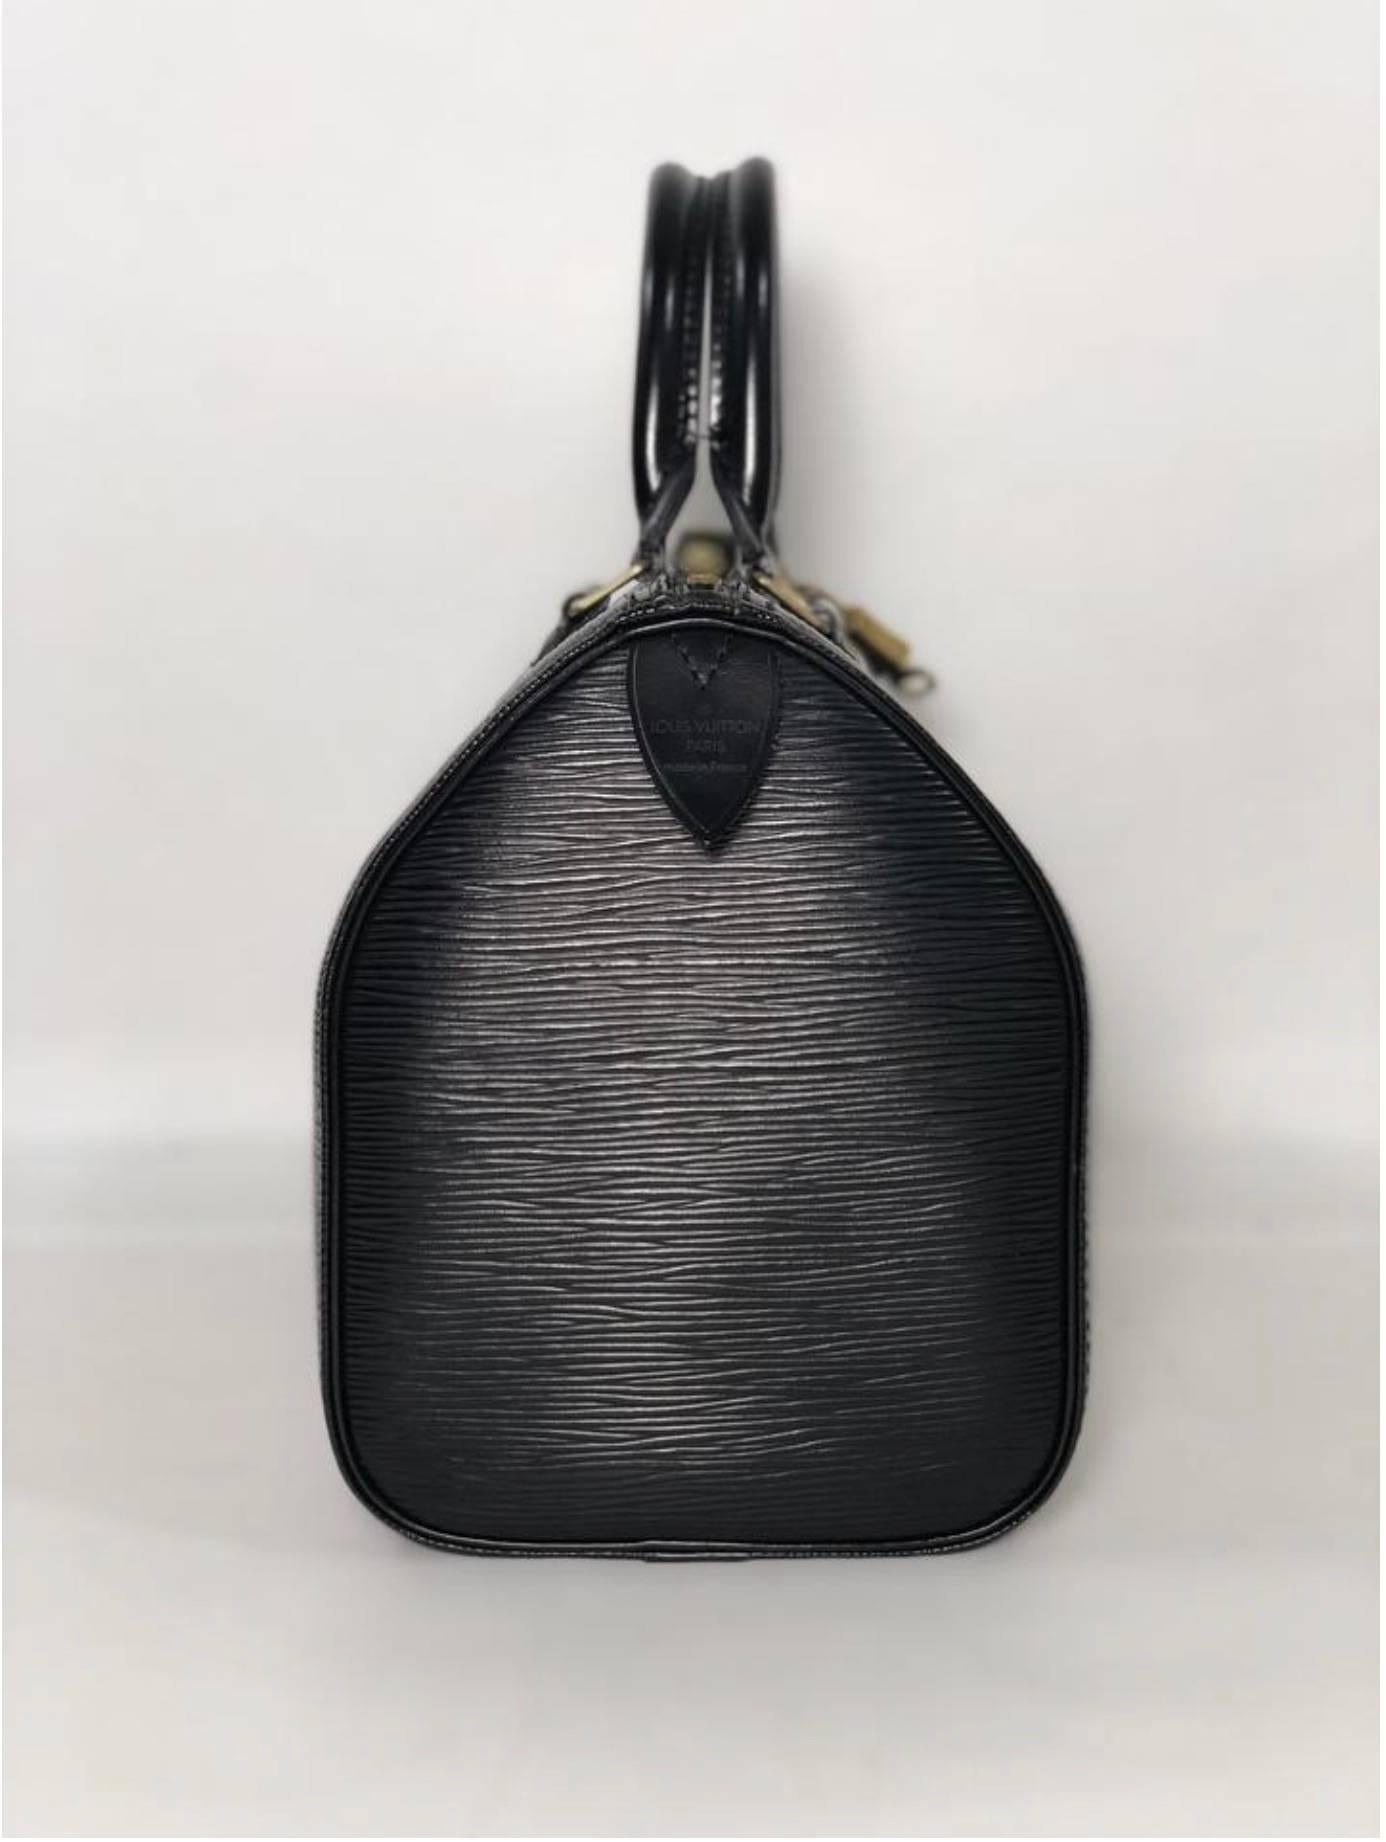 Women's or Men's Louis Vuitton Epi Speedy 25 in Black Satchel Handbag